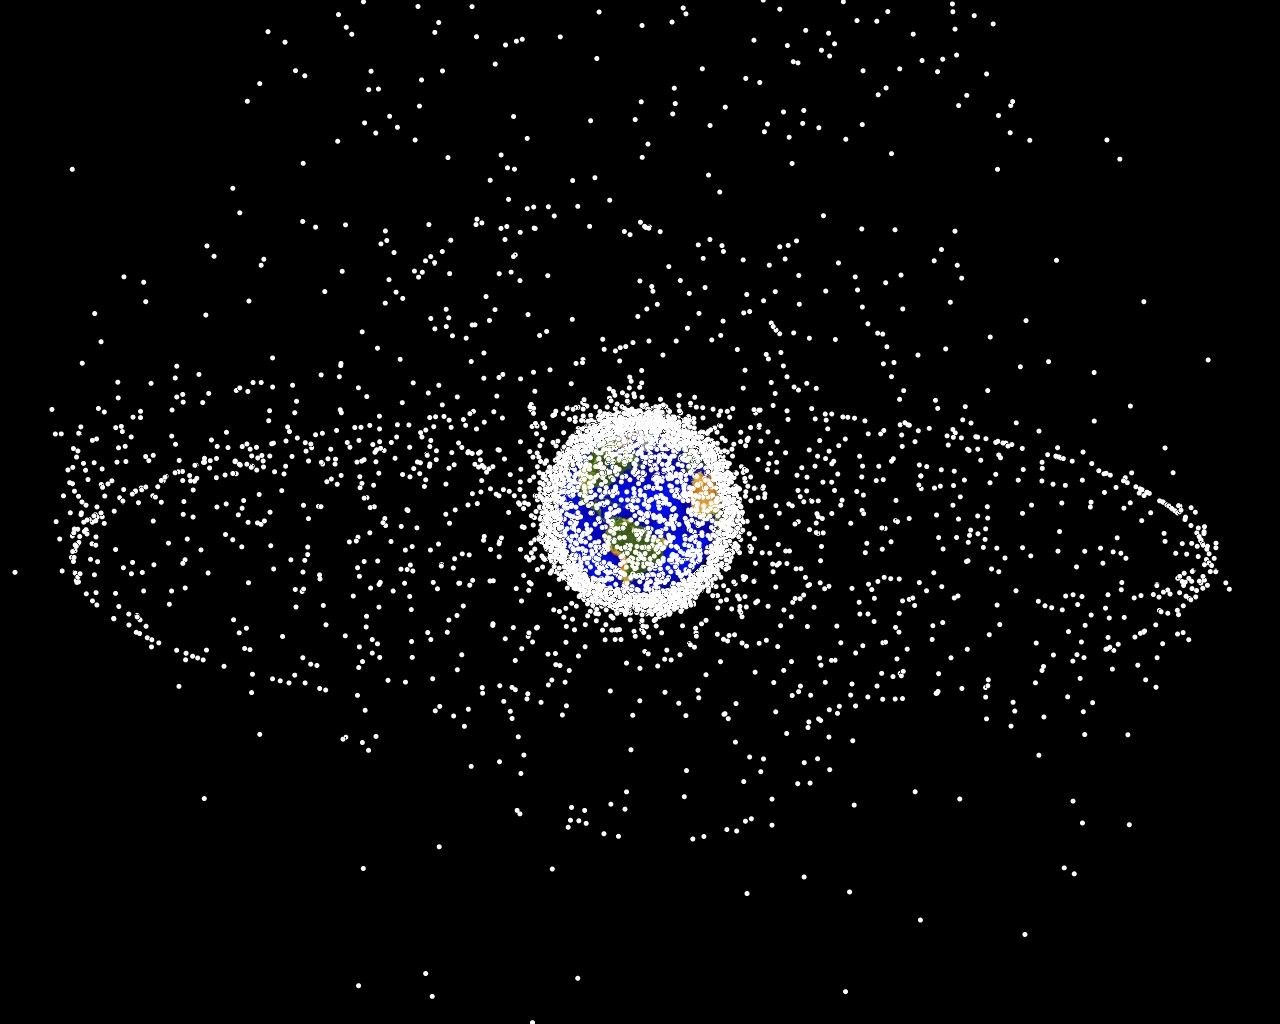 space debris plot NASA